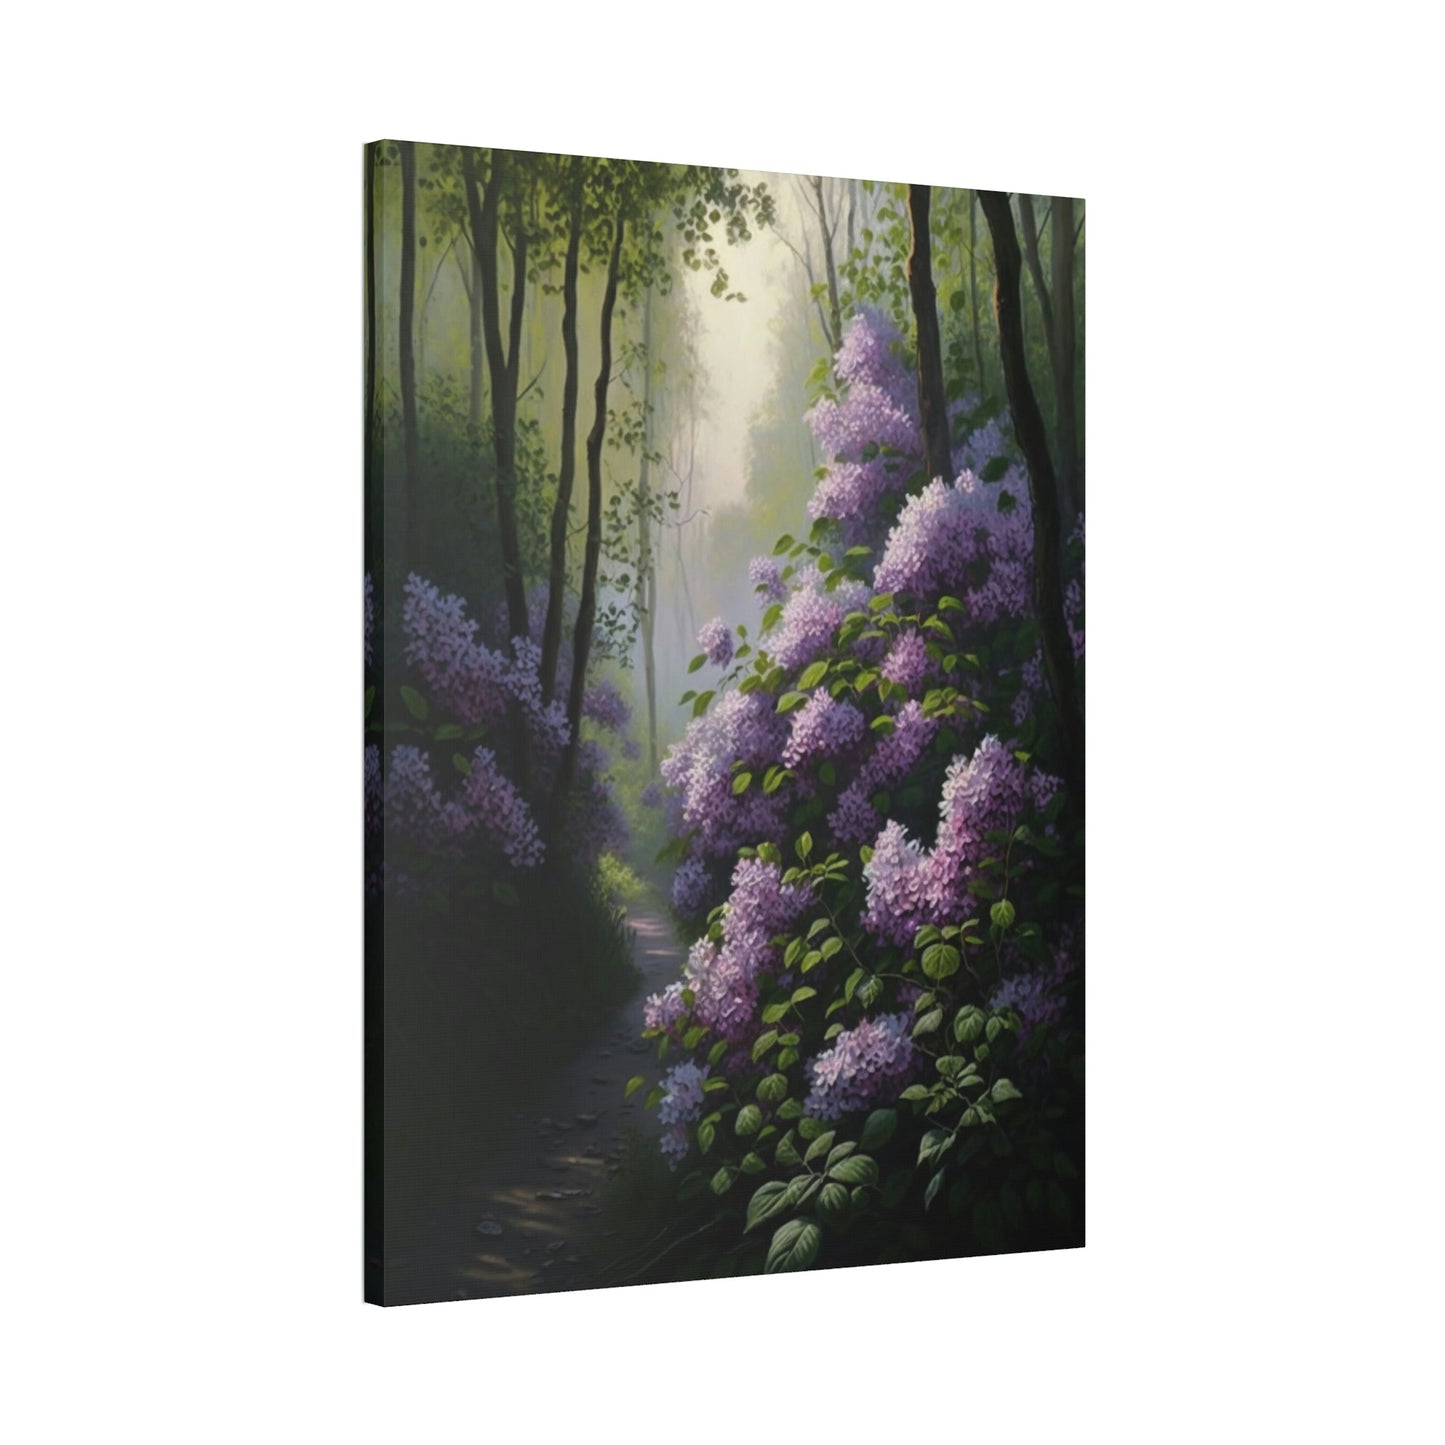 Lilacs in Bloom: A Fragrant Symphony